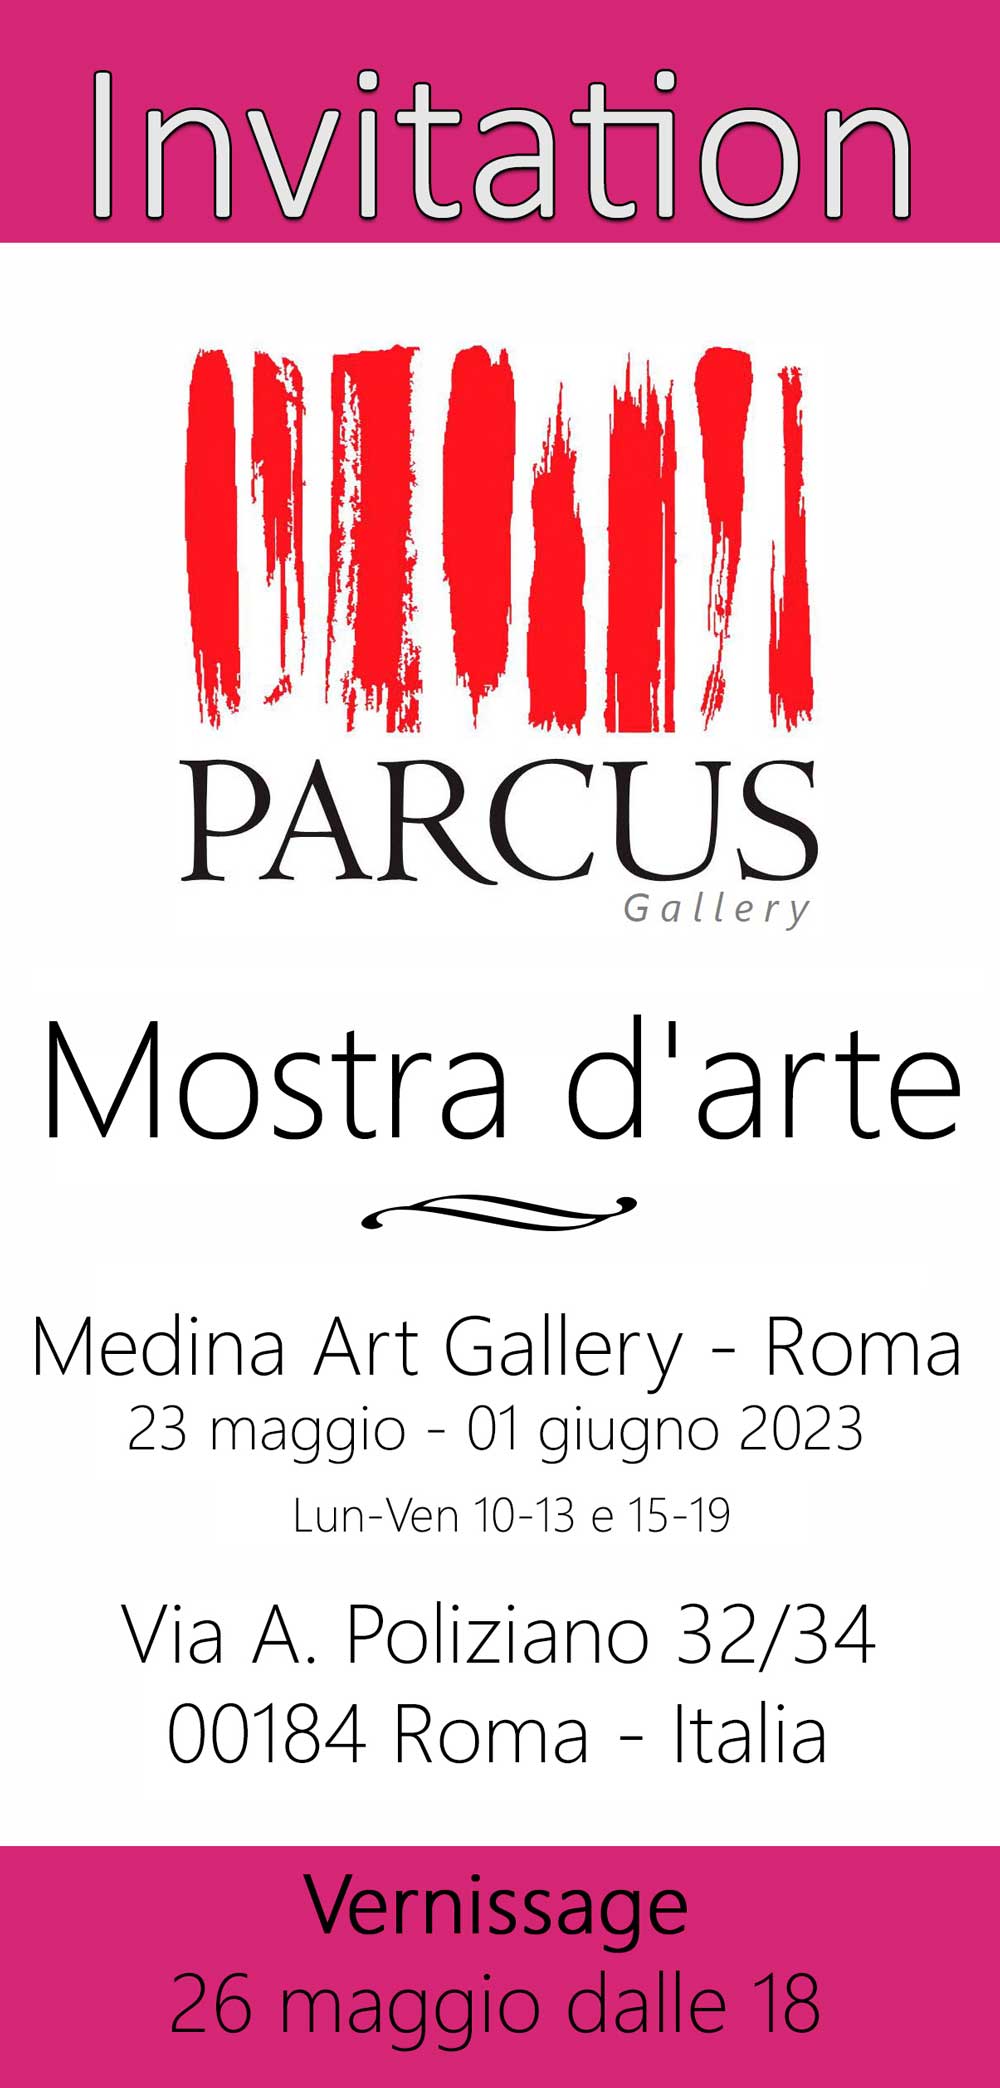 Parcus Gallery, la Mostra d'Arte